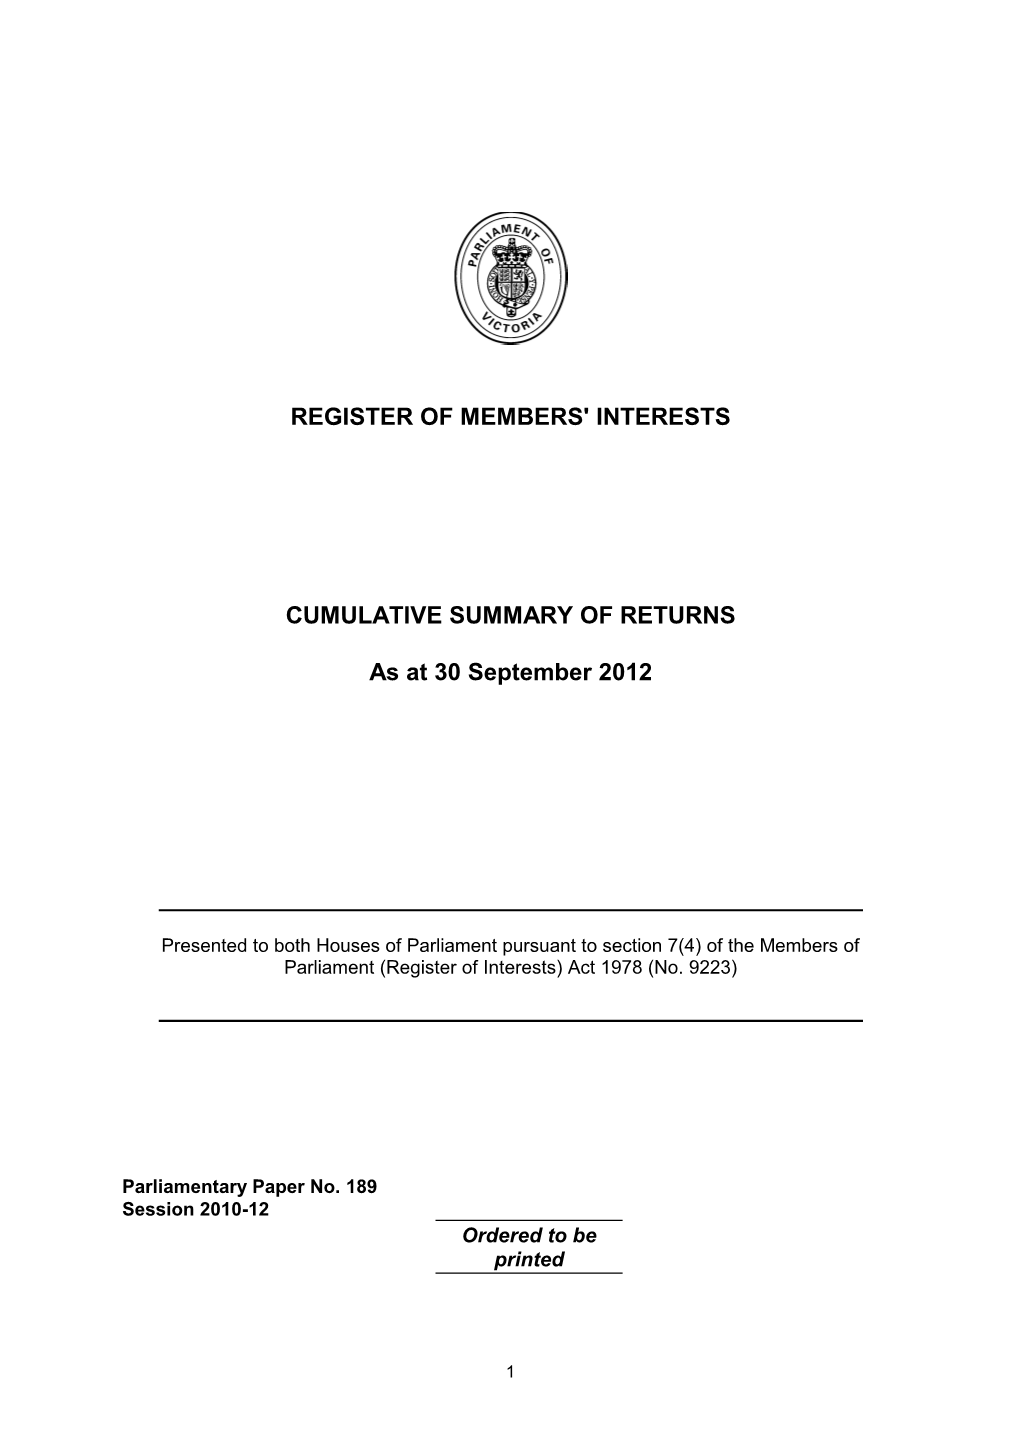 Register of Members' Interests Cumulative Summary